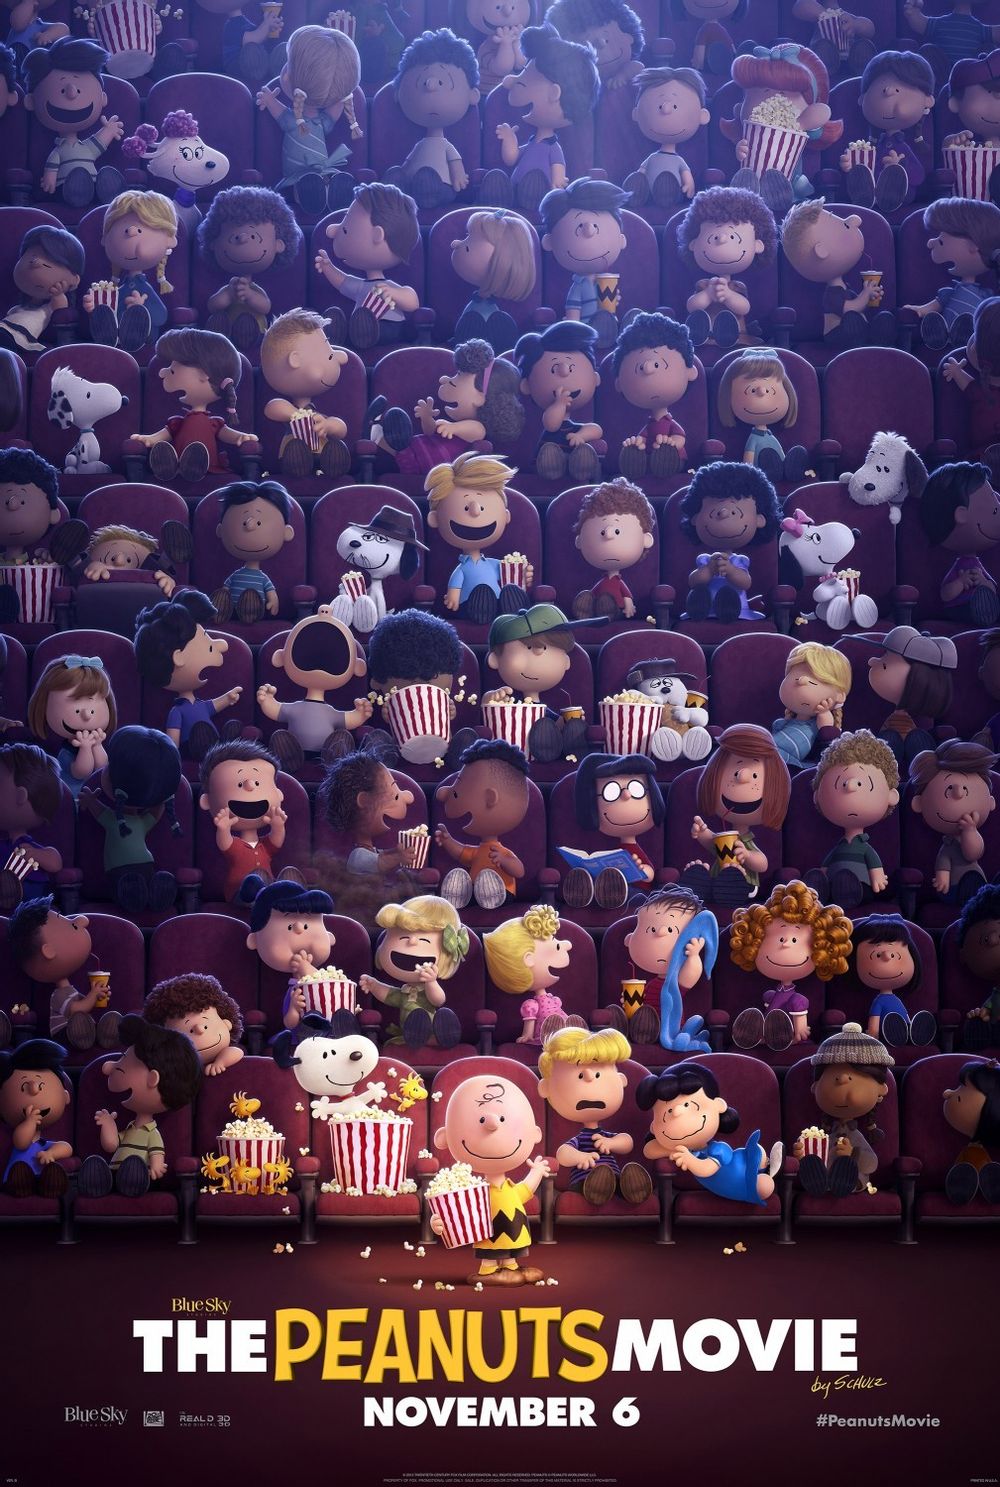 https://mediaproxy.tvtropes.org/width/1000/https://static.tvtropes.org/pmwiki/pub/images/the_peanuts_movie_poster.jpg